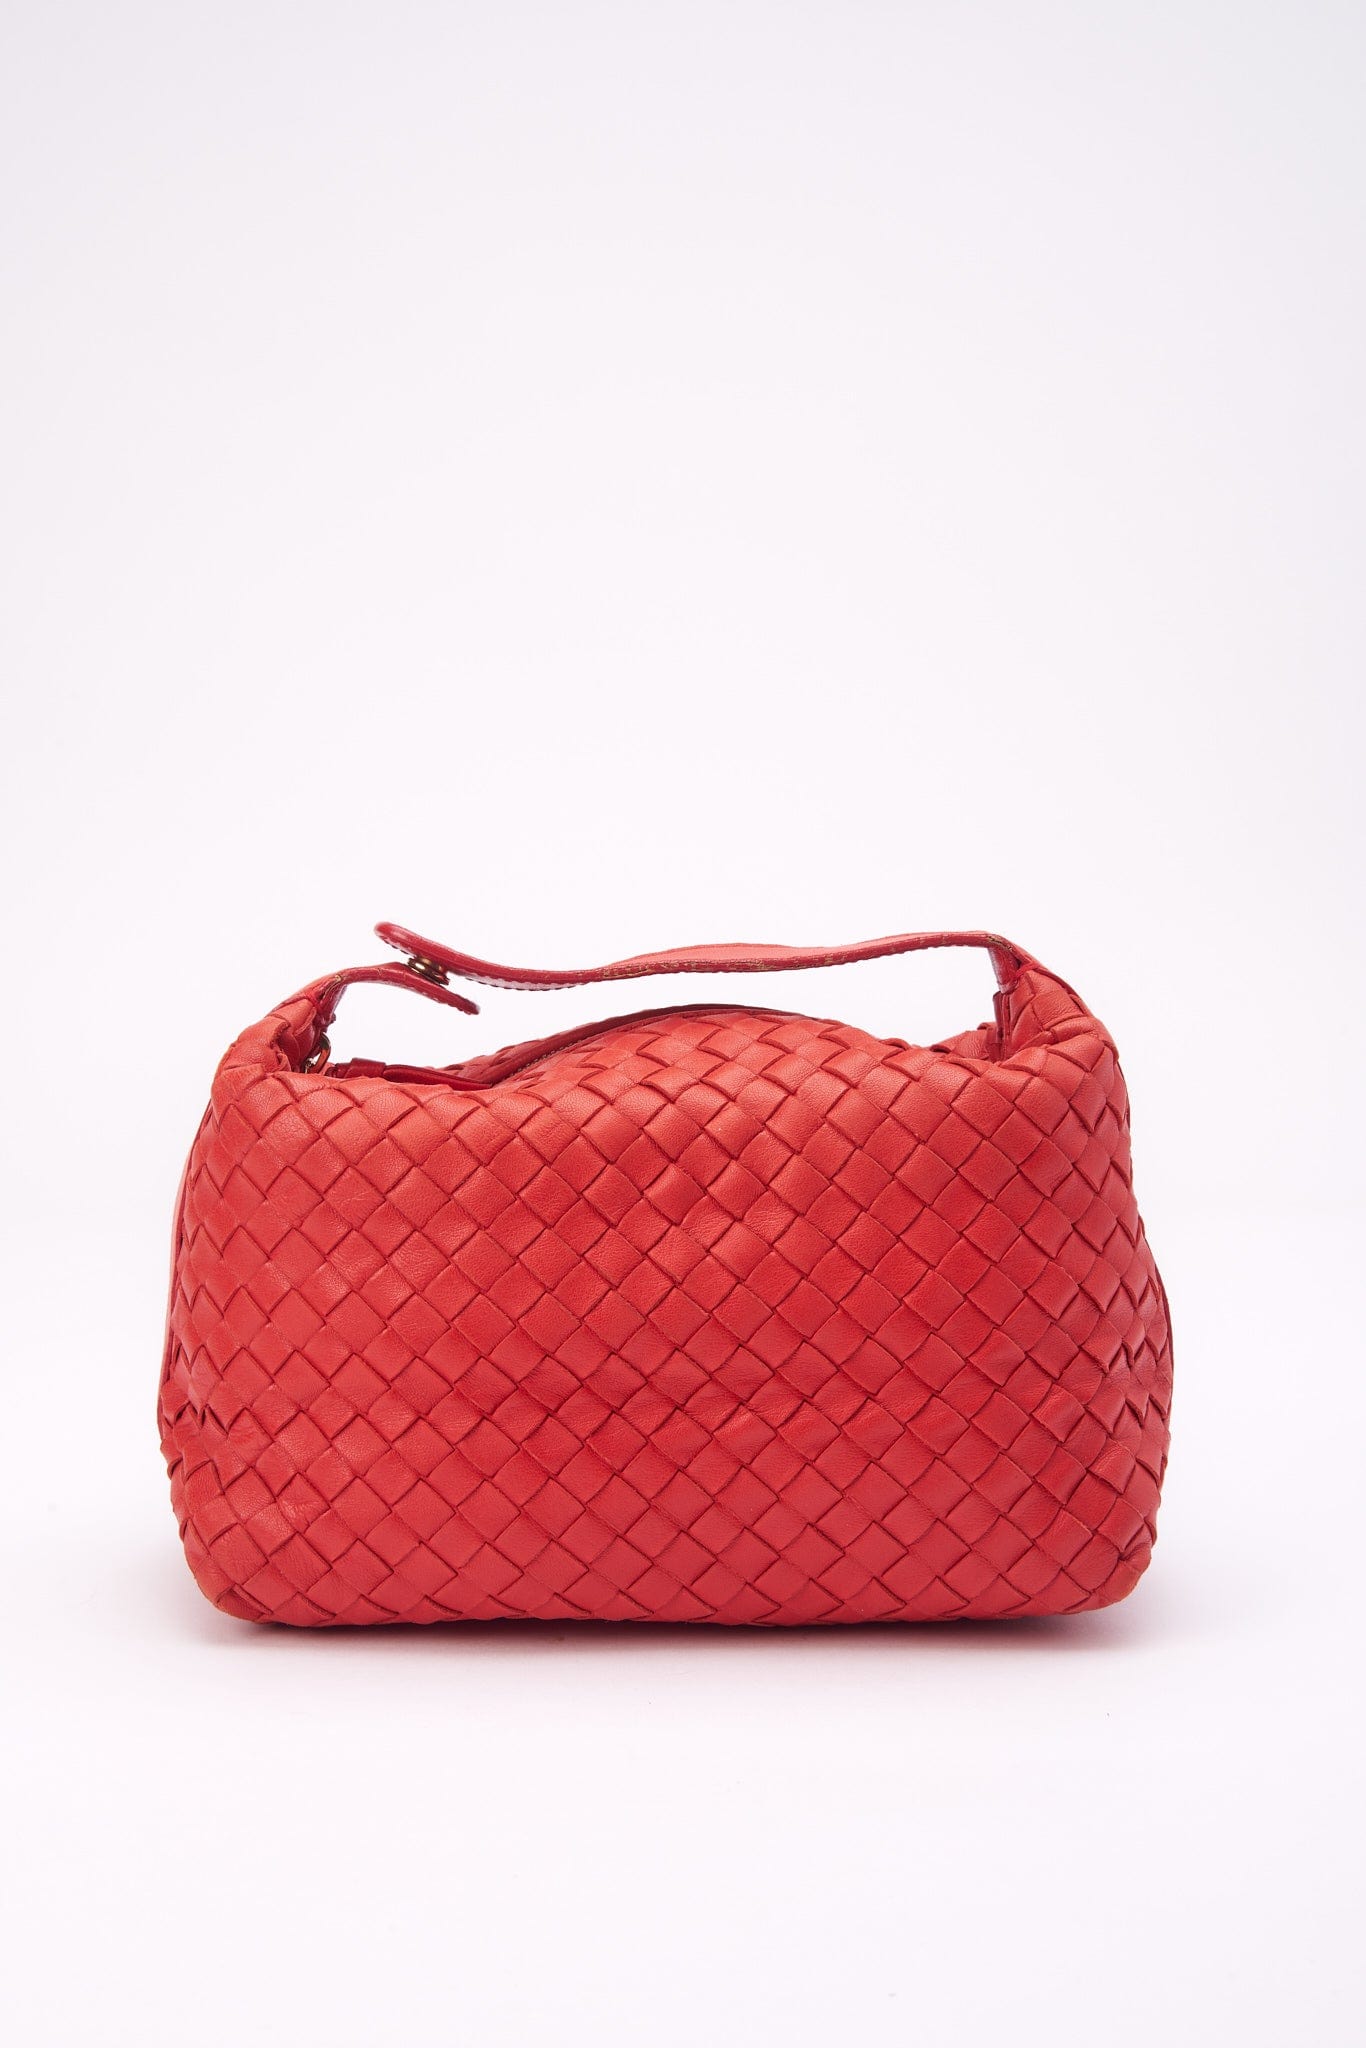 Vintage Bottega Veneta Red Intrecciato Leather Bag